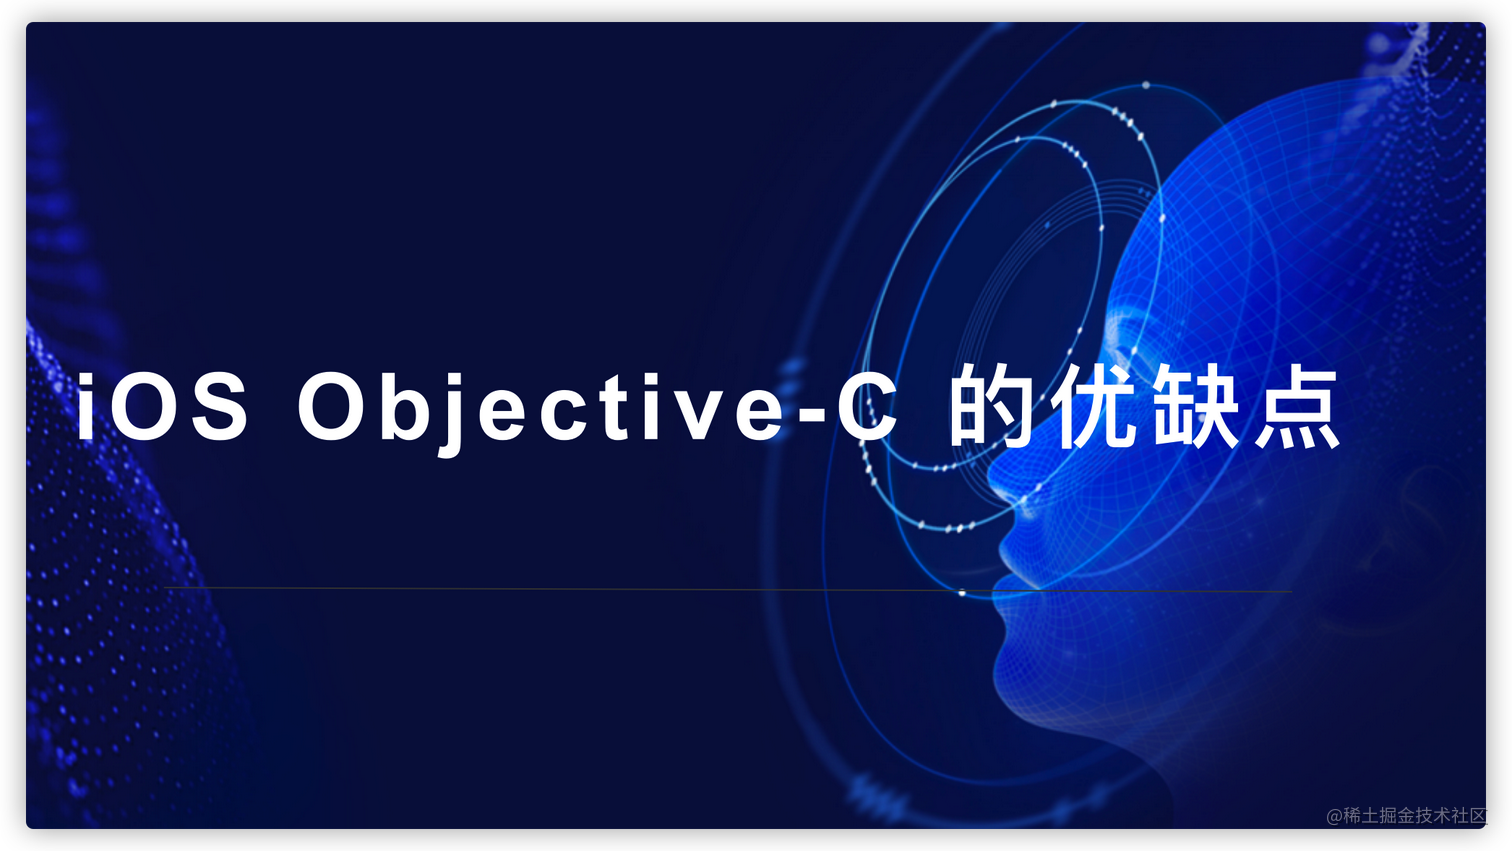 iOS Objective-C 的优缺点